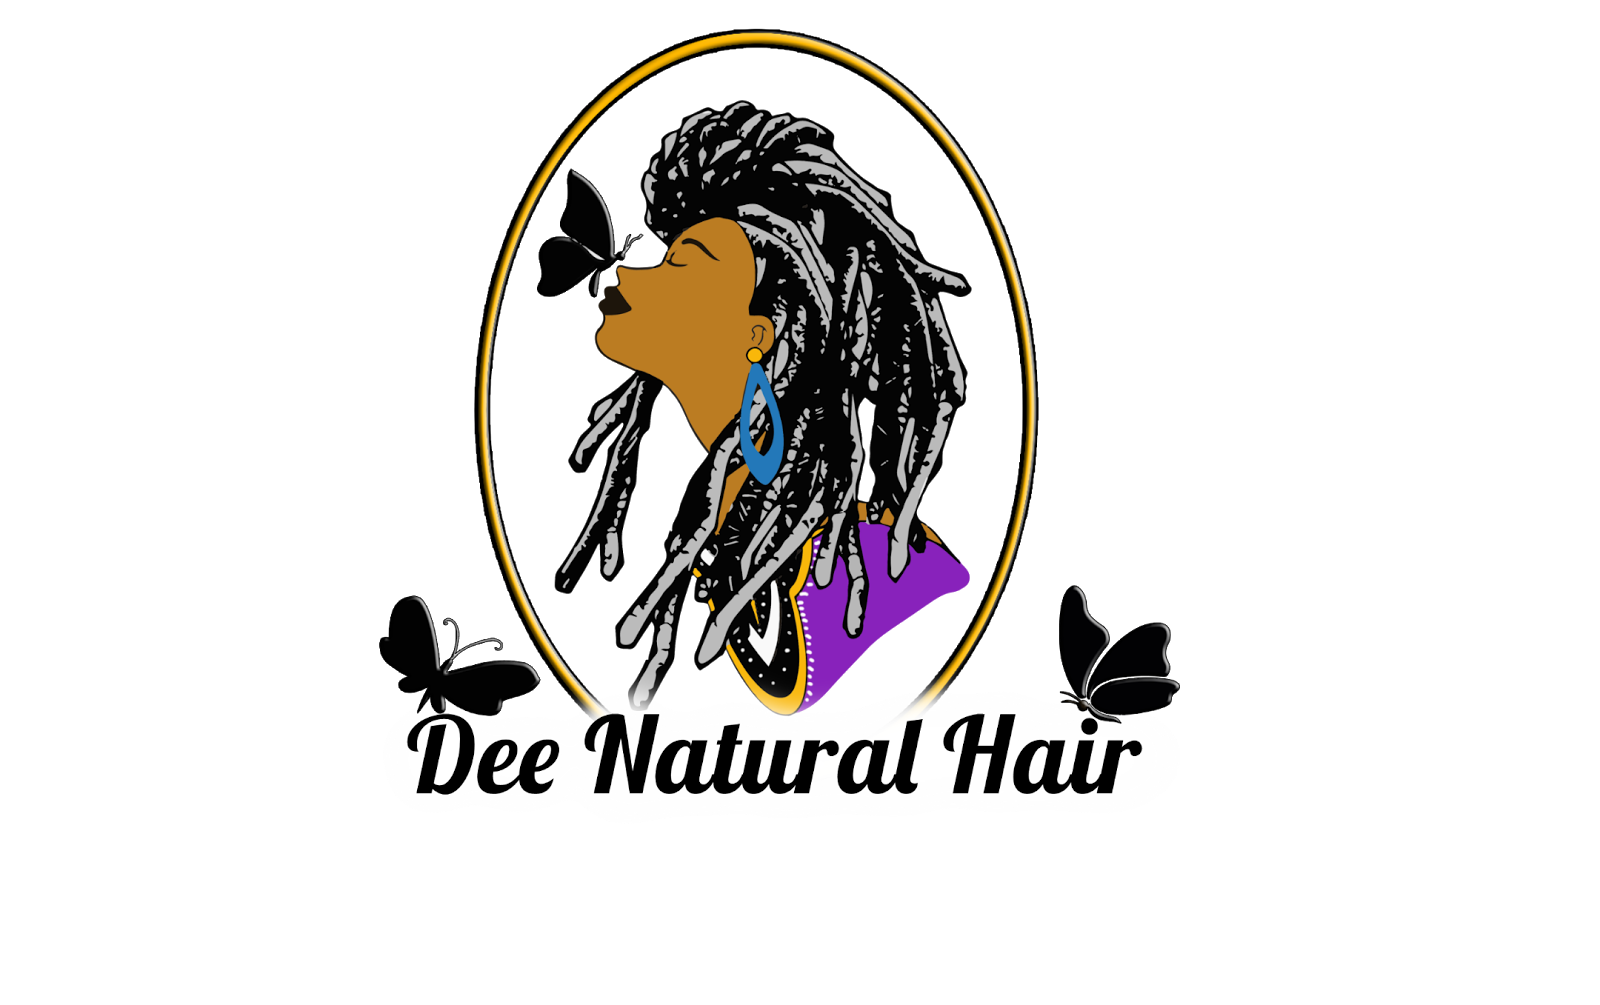 Dee Natural Hair